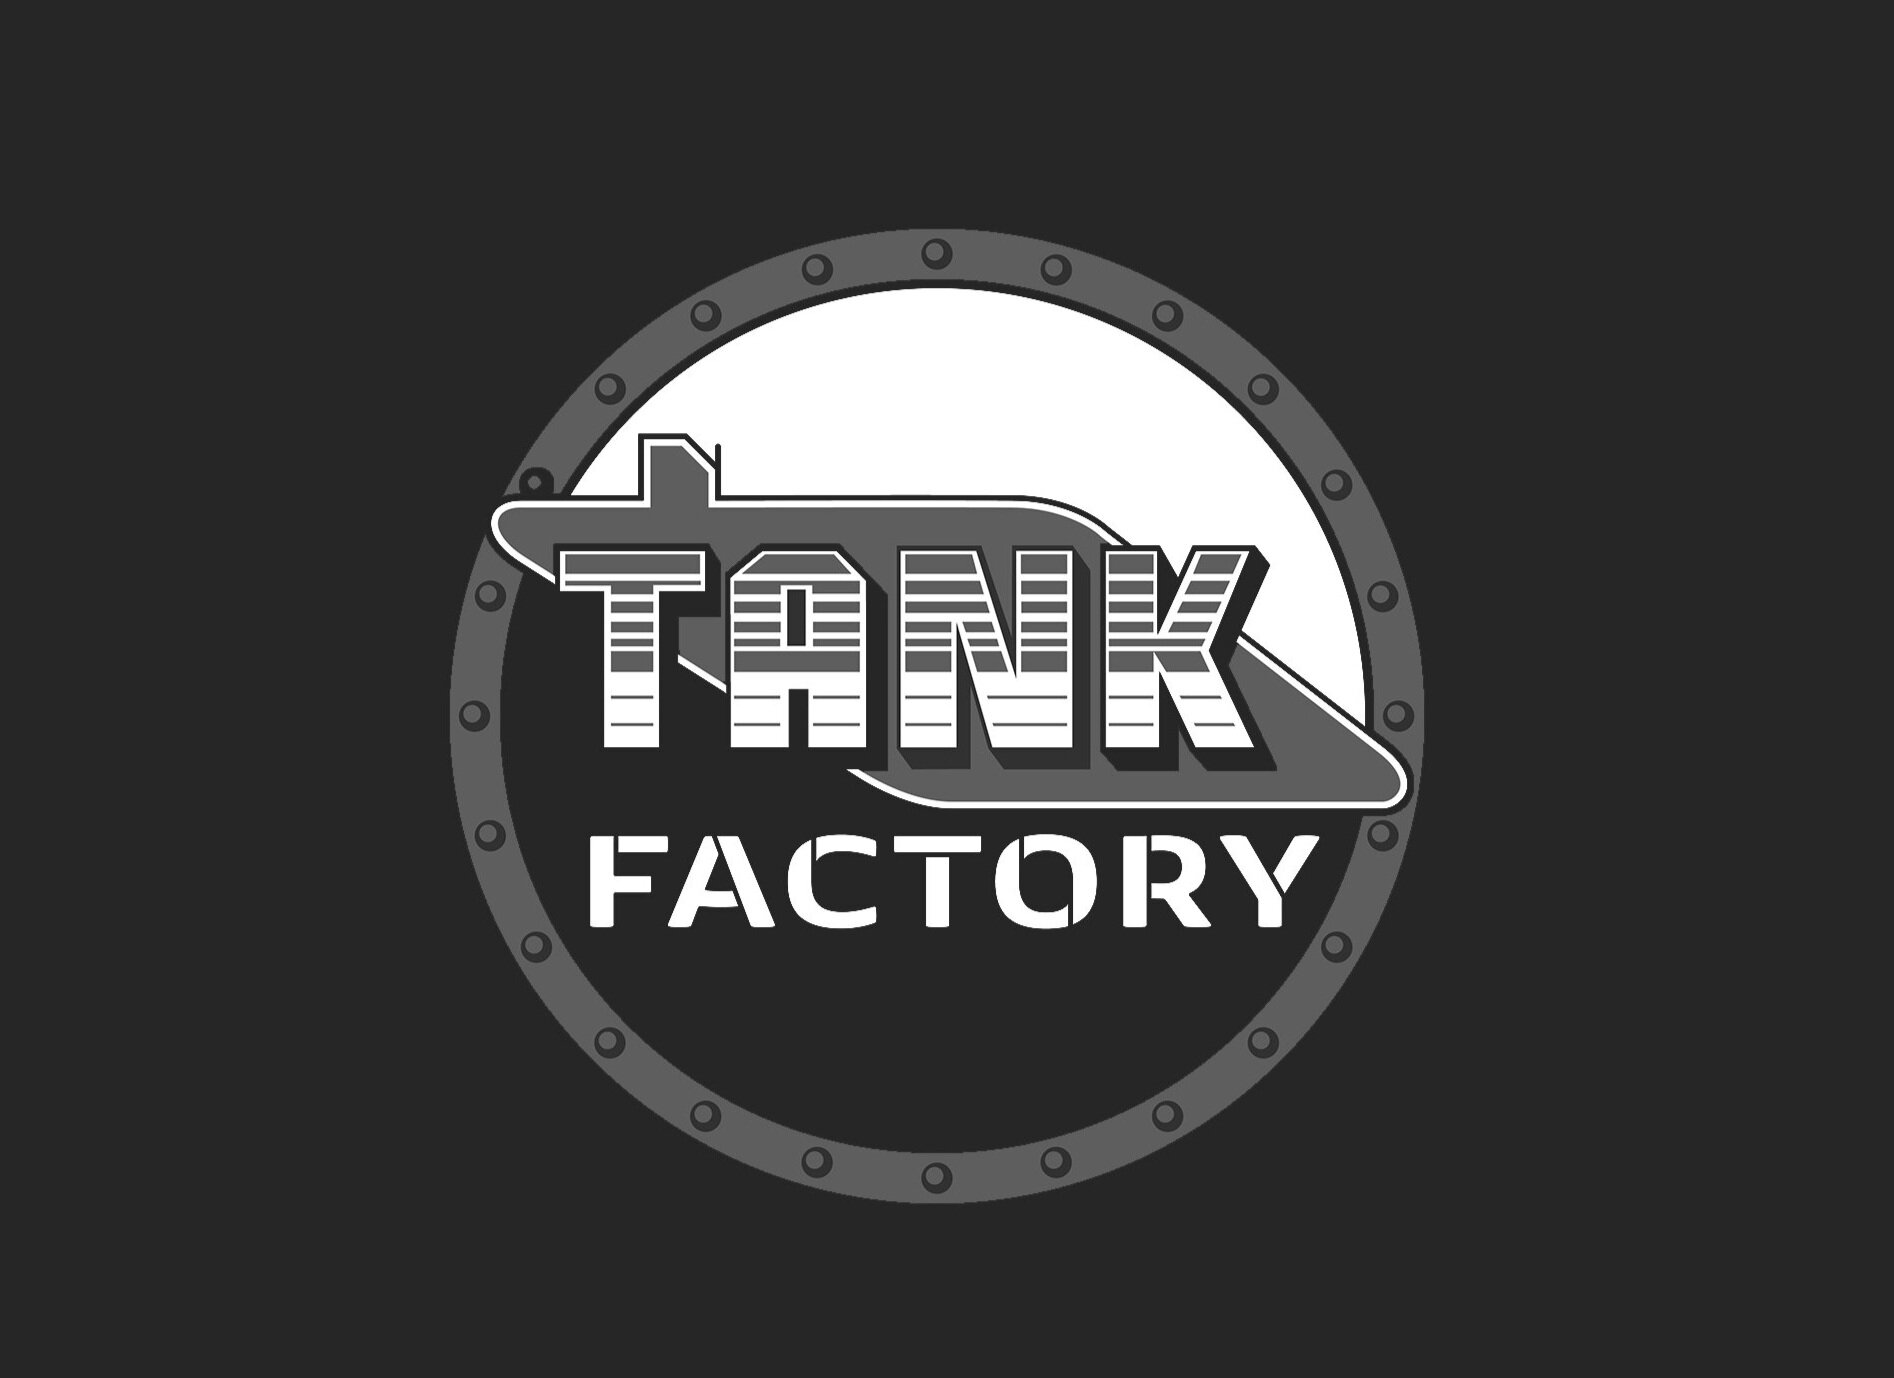 The Tank Factory Studios